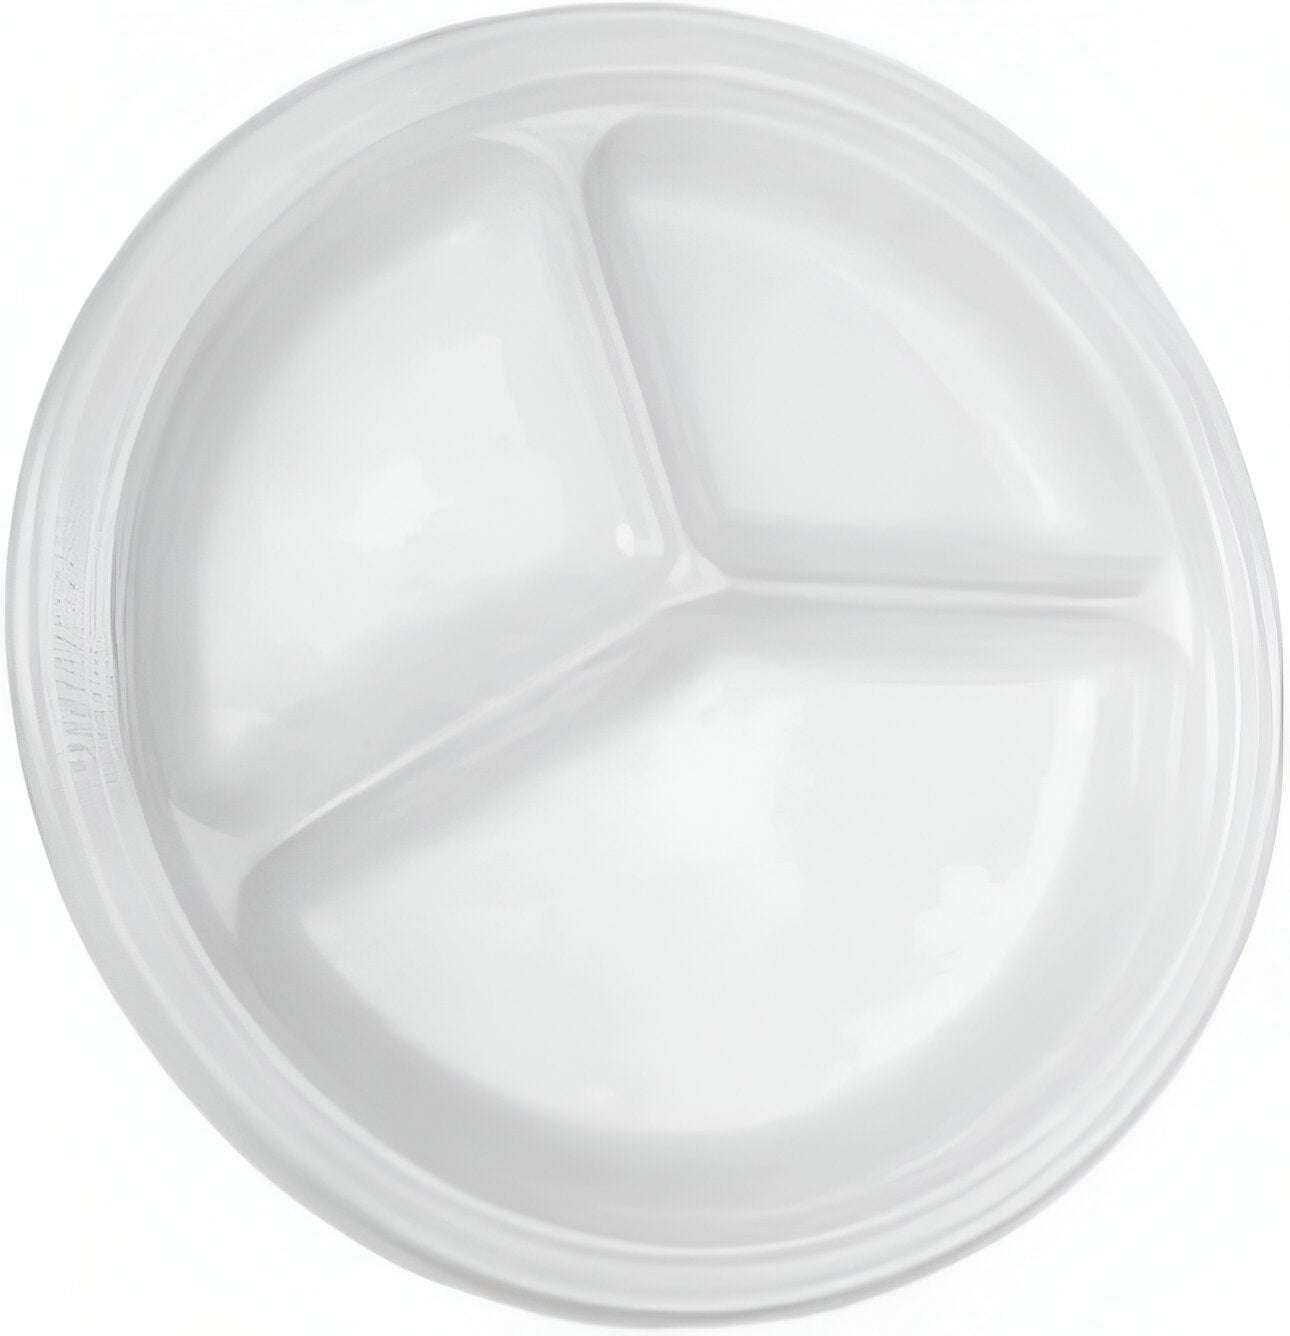 CKF Inc. - 9" Dynette 3 Compartment Foam Plates, 500/cs - 88623